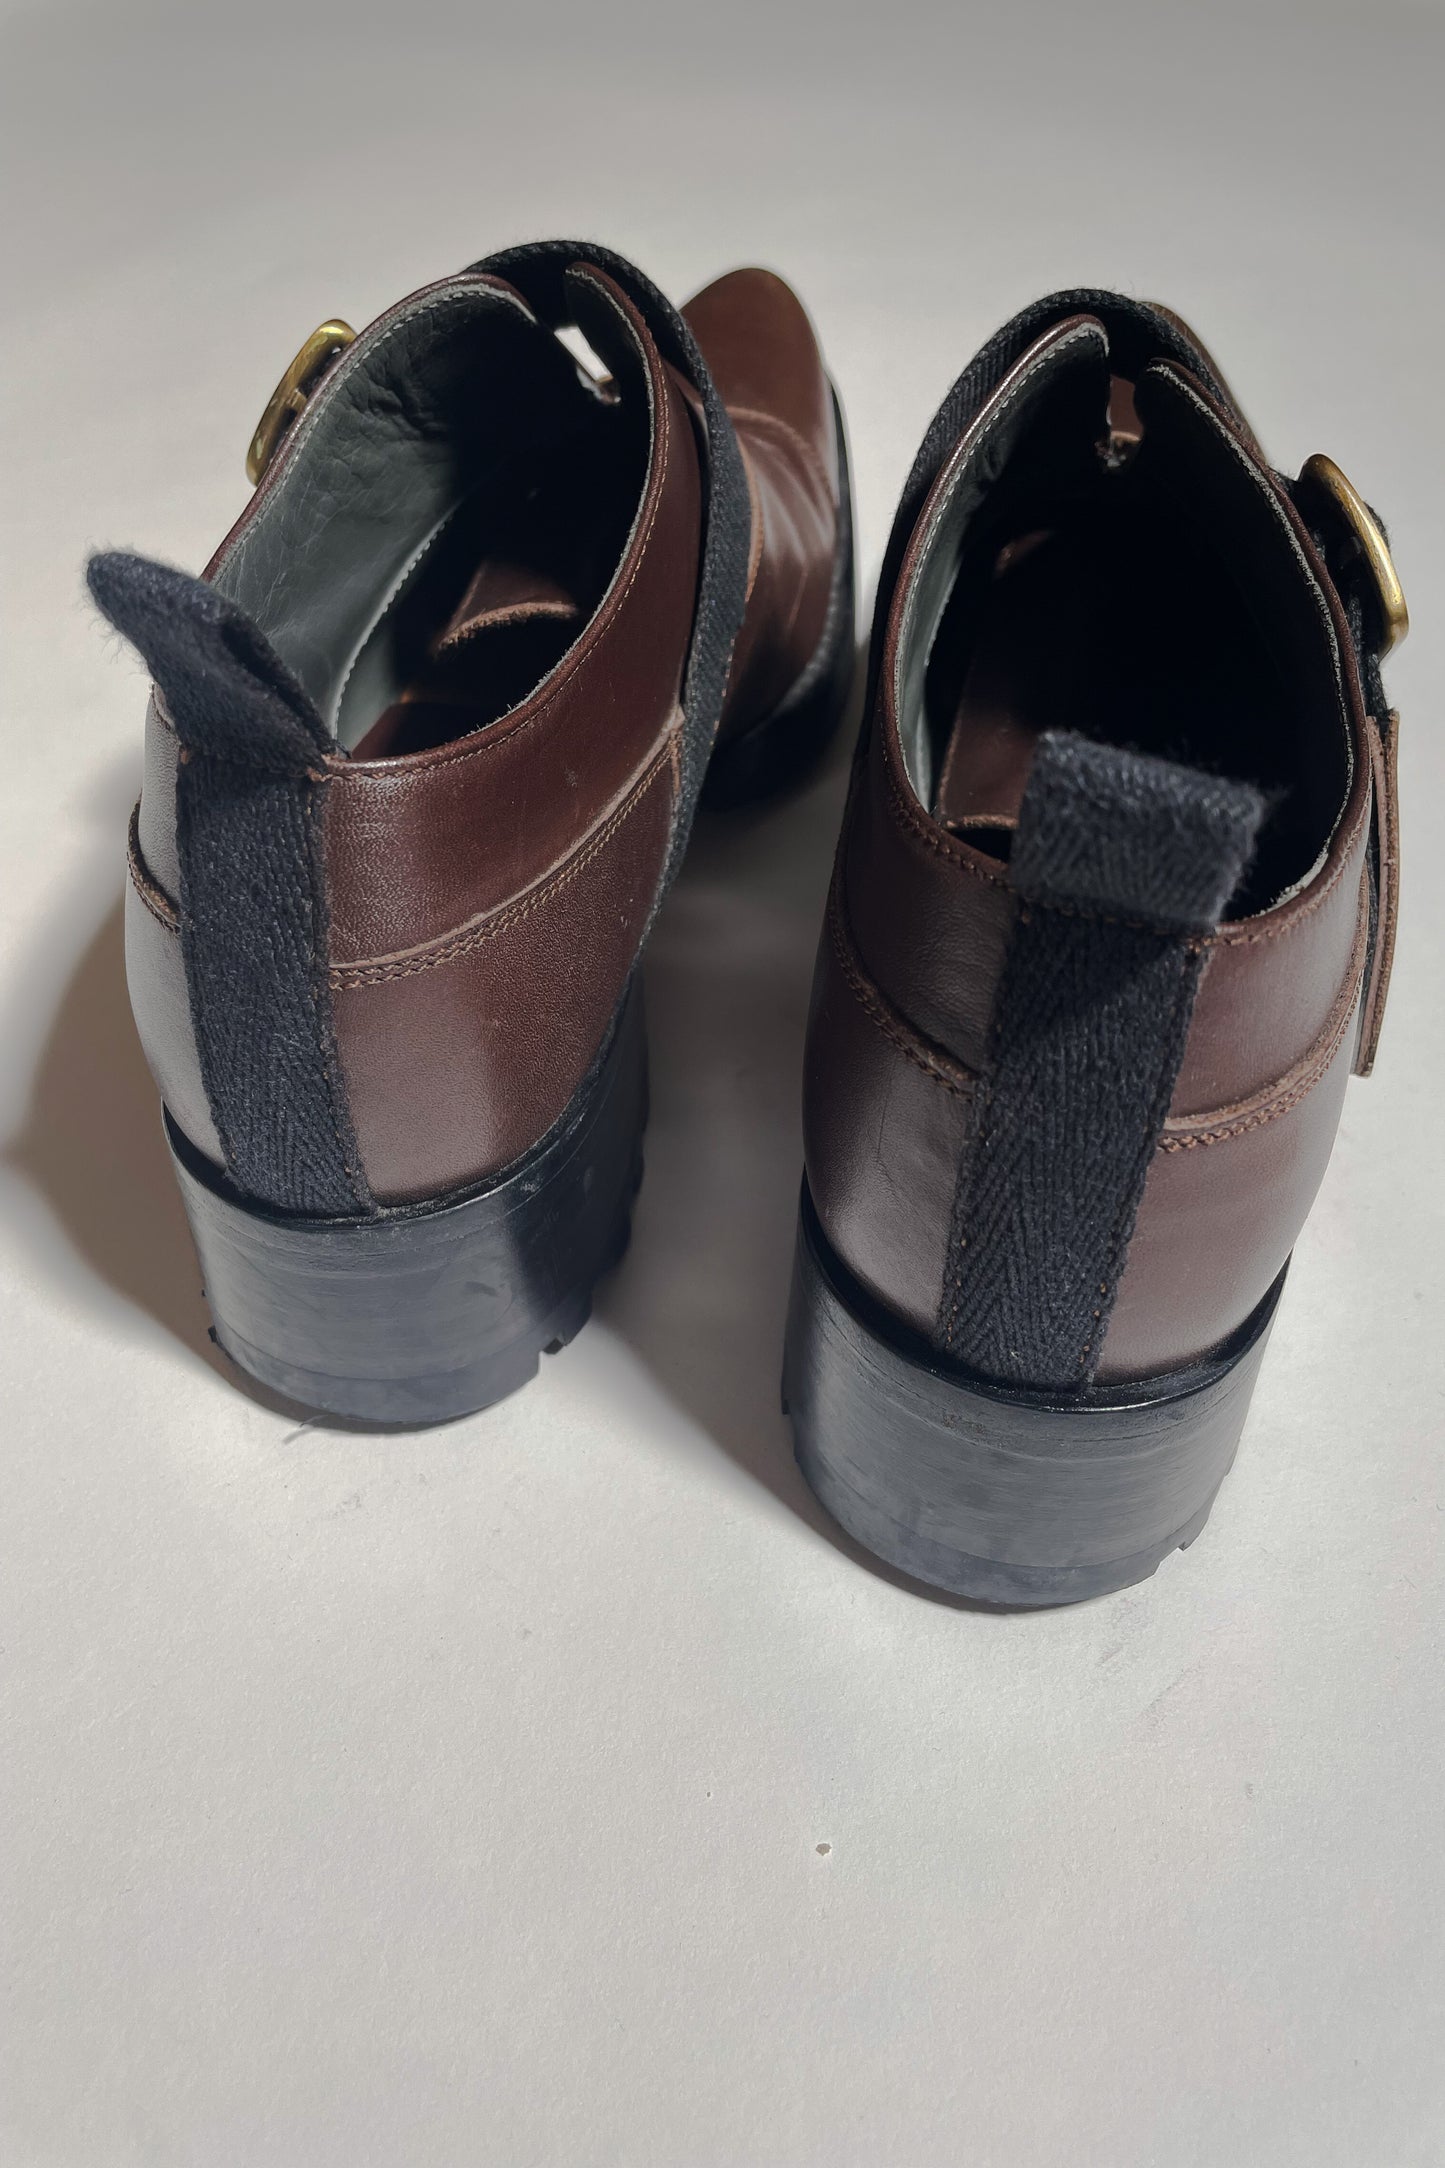 Miu Miu - Late 90's Loafers